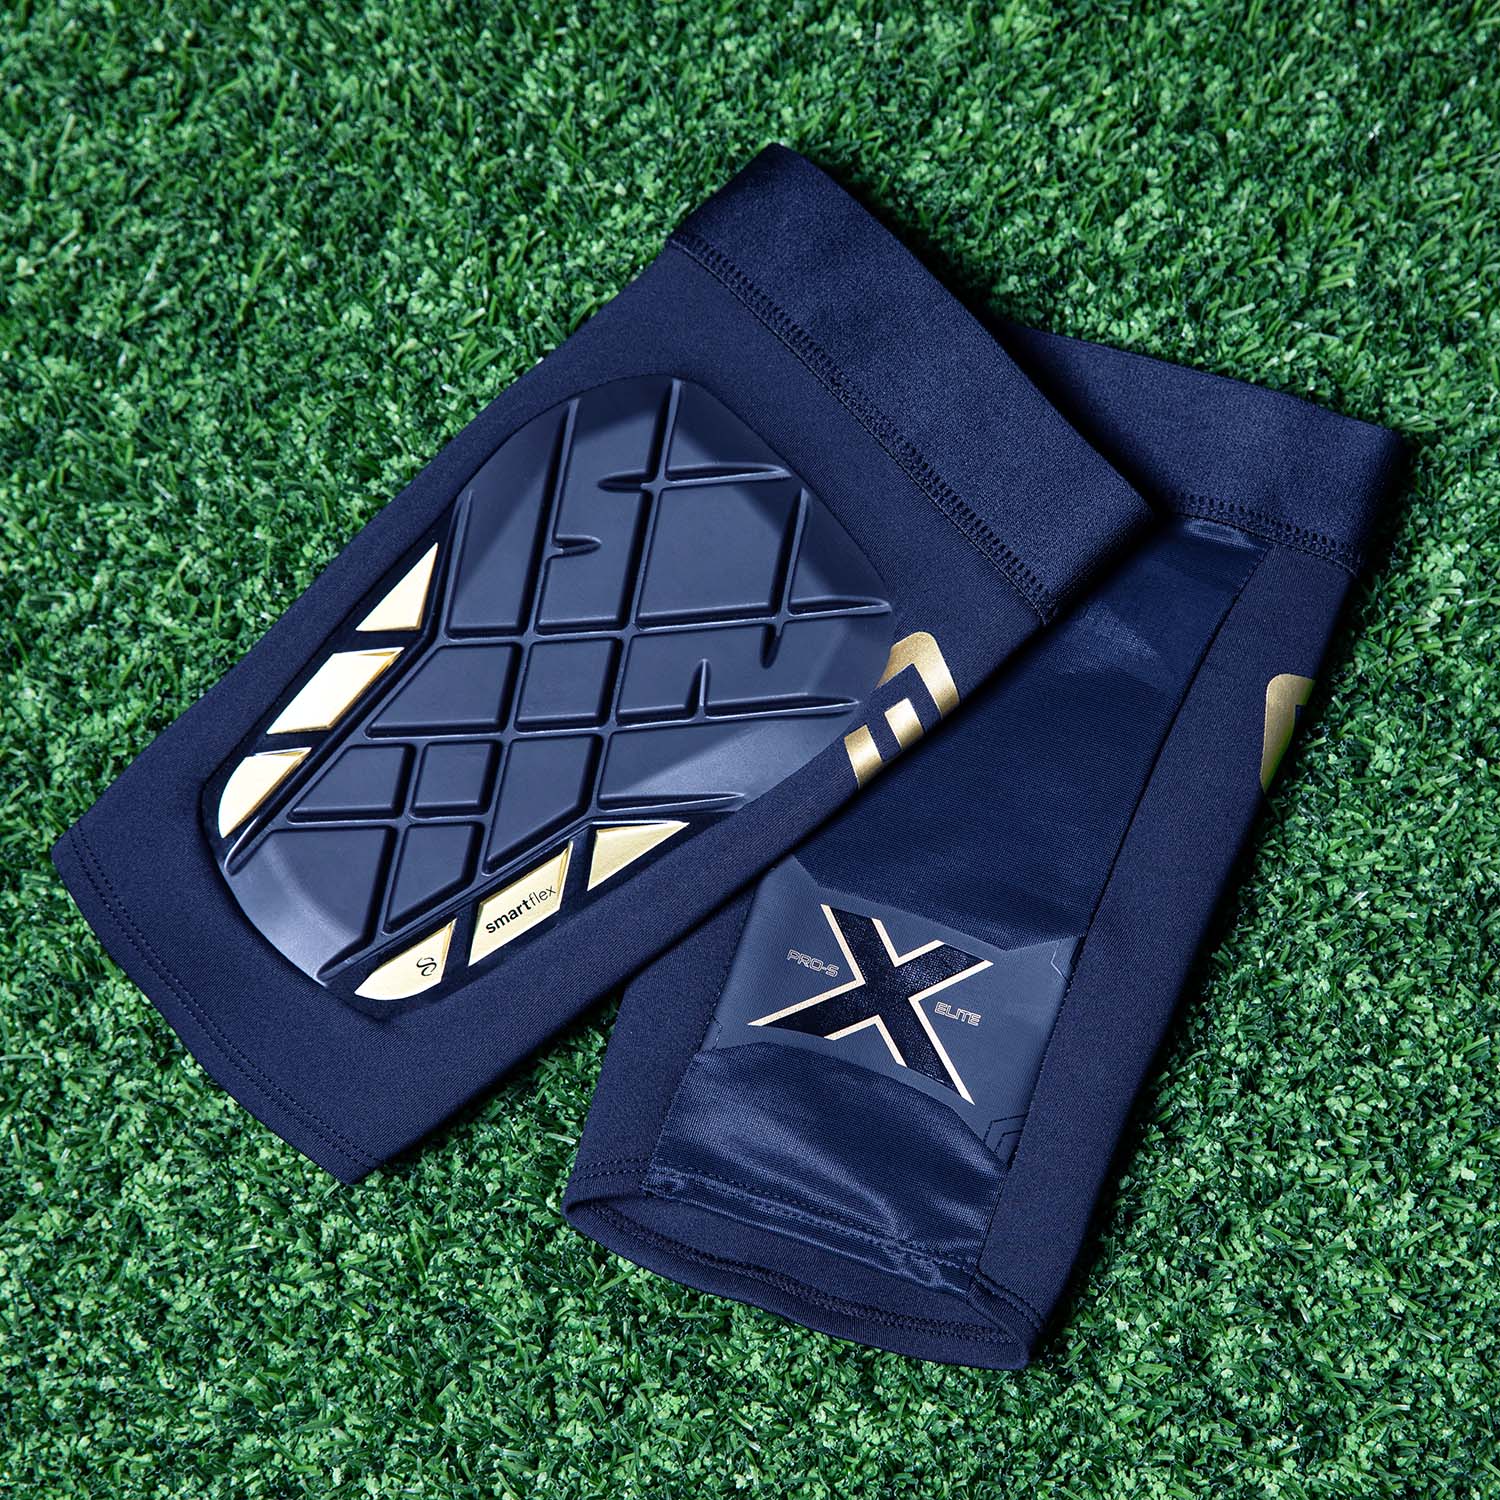 Elite X Shin Guard Soccer Premium Shin Pads Black Sleek Football Flexible Machine Washable Shin Pads Lightweight Adult